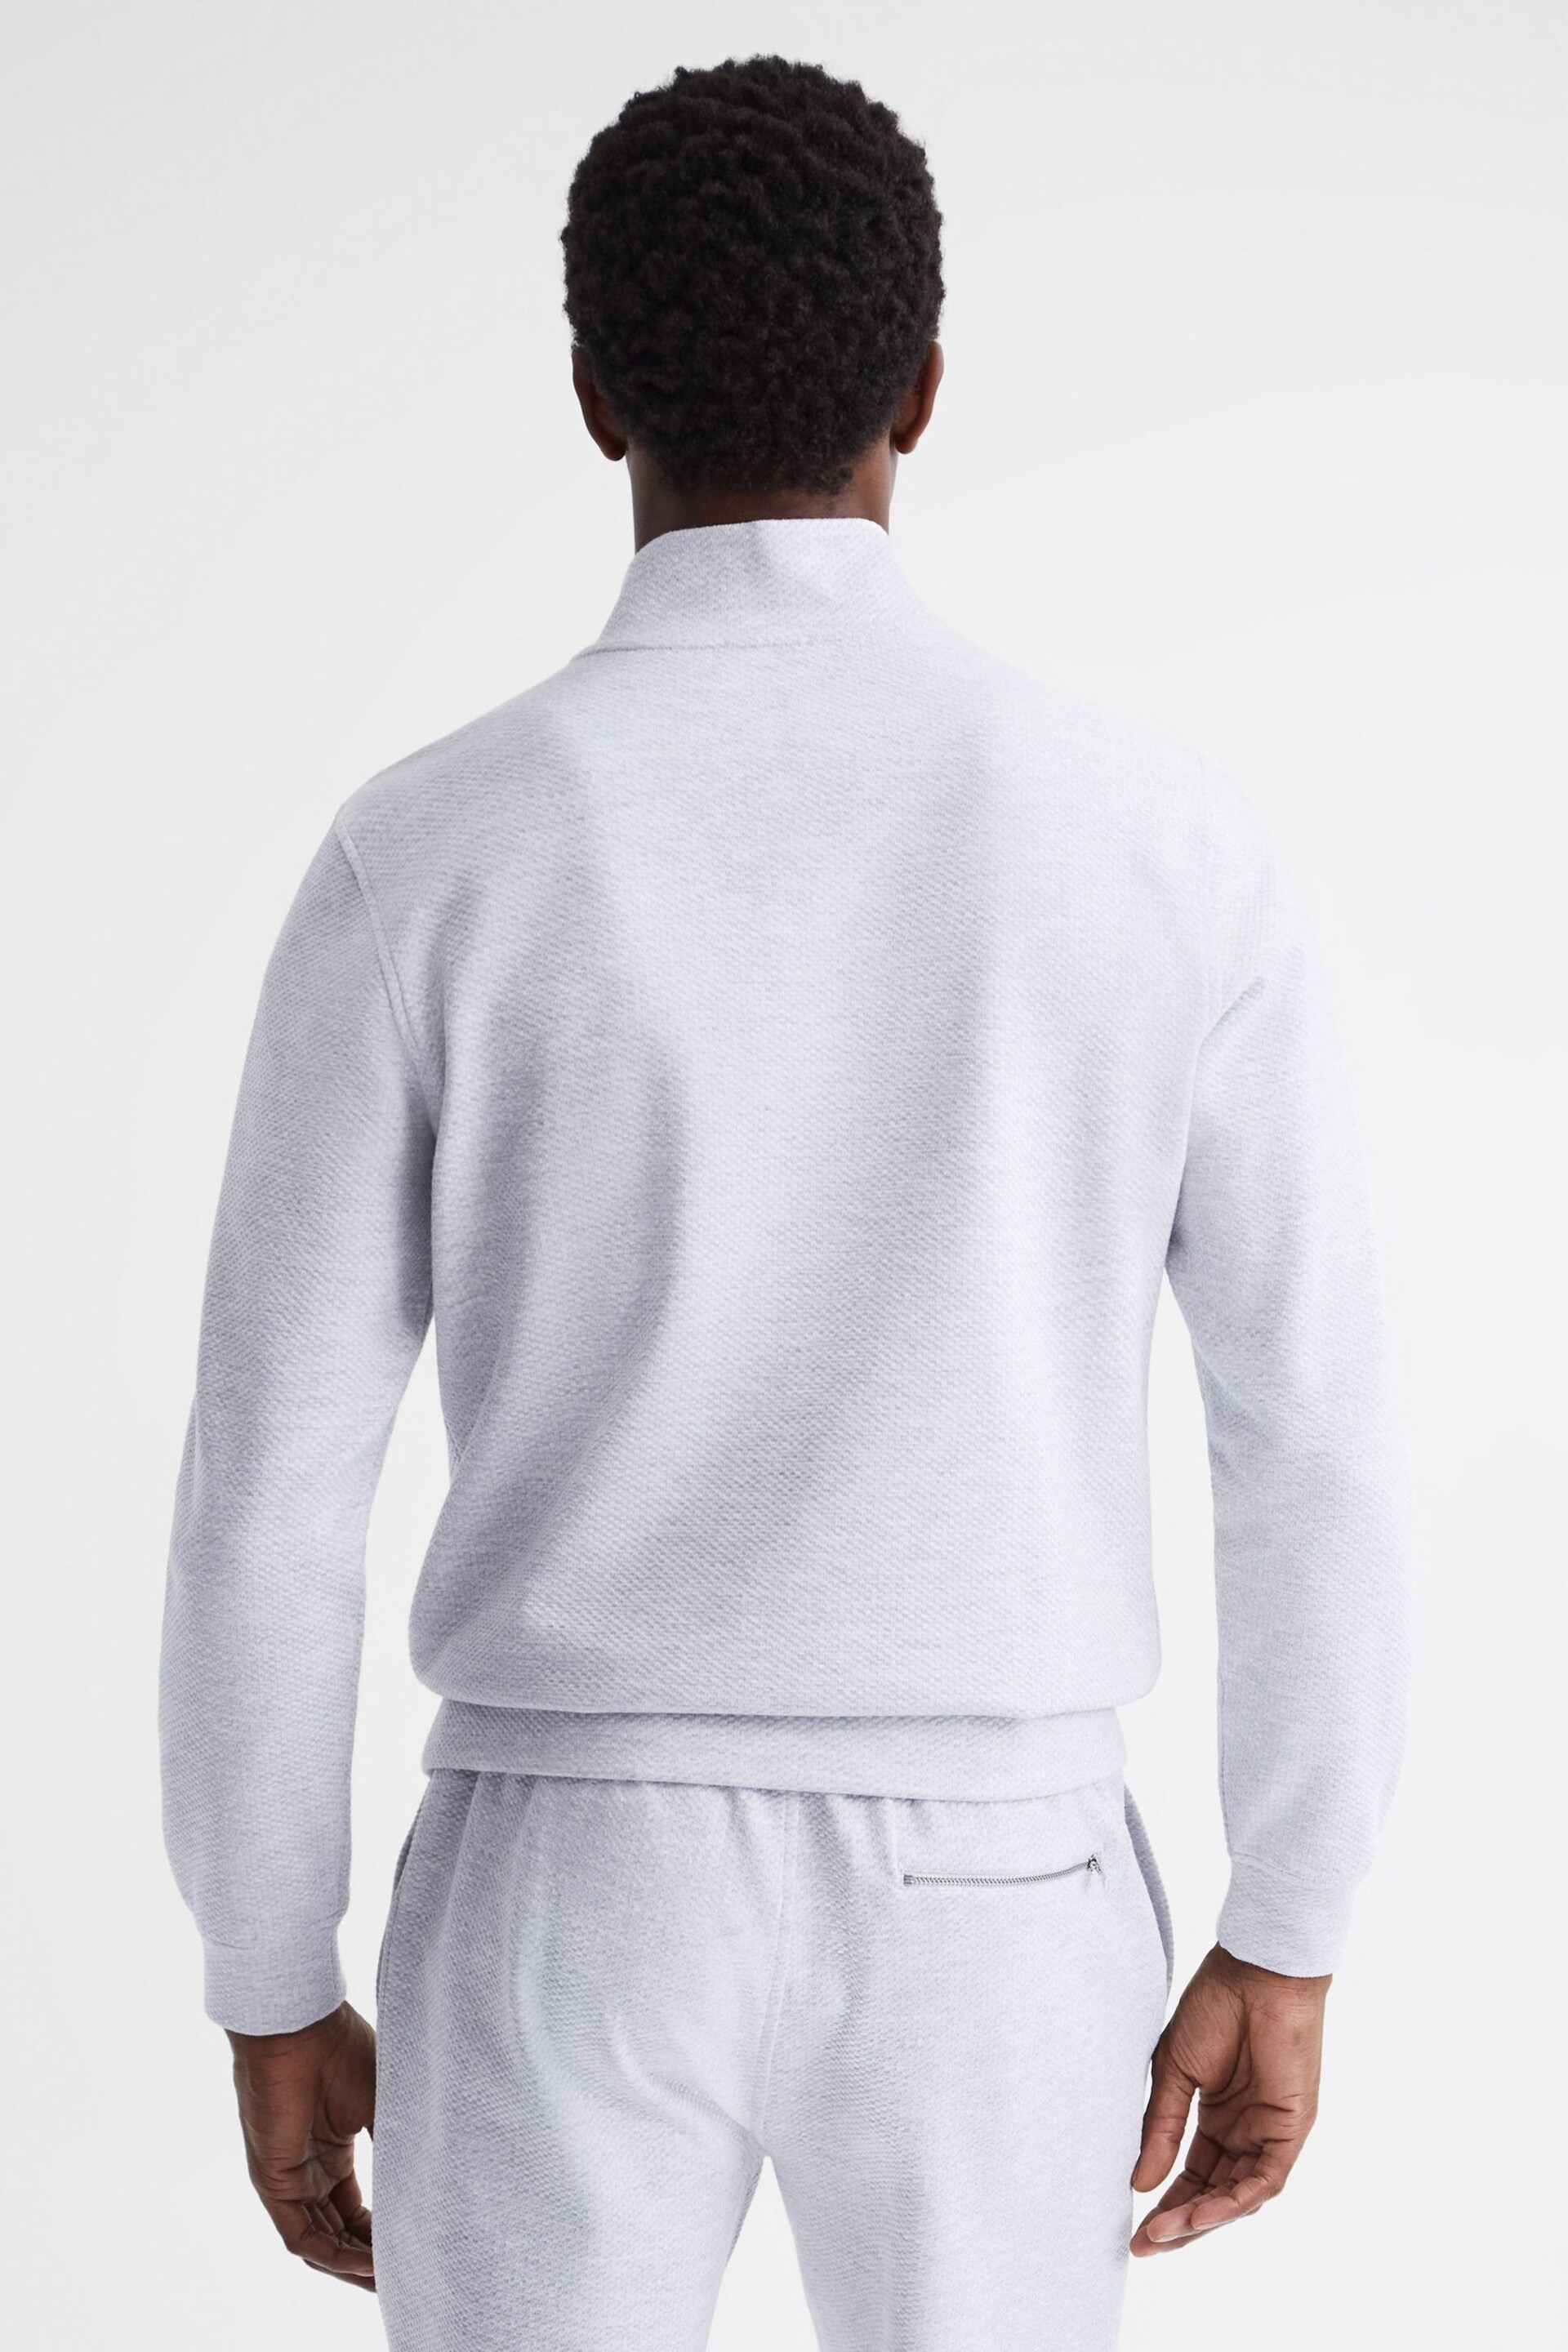 Reiss Grey Melange Bishop Slim Fit Textured Half Zip Top - Image 5 of 6